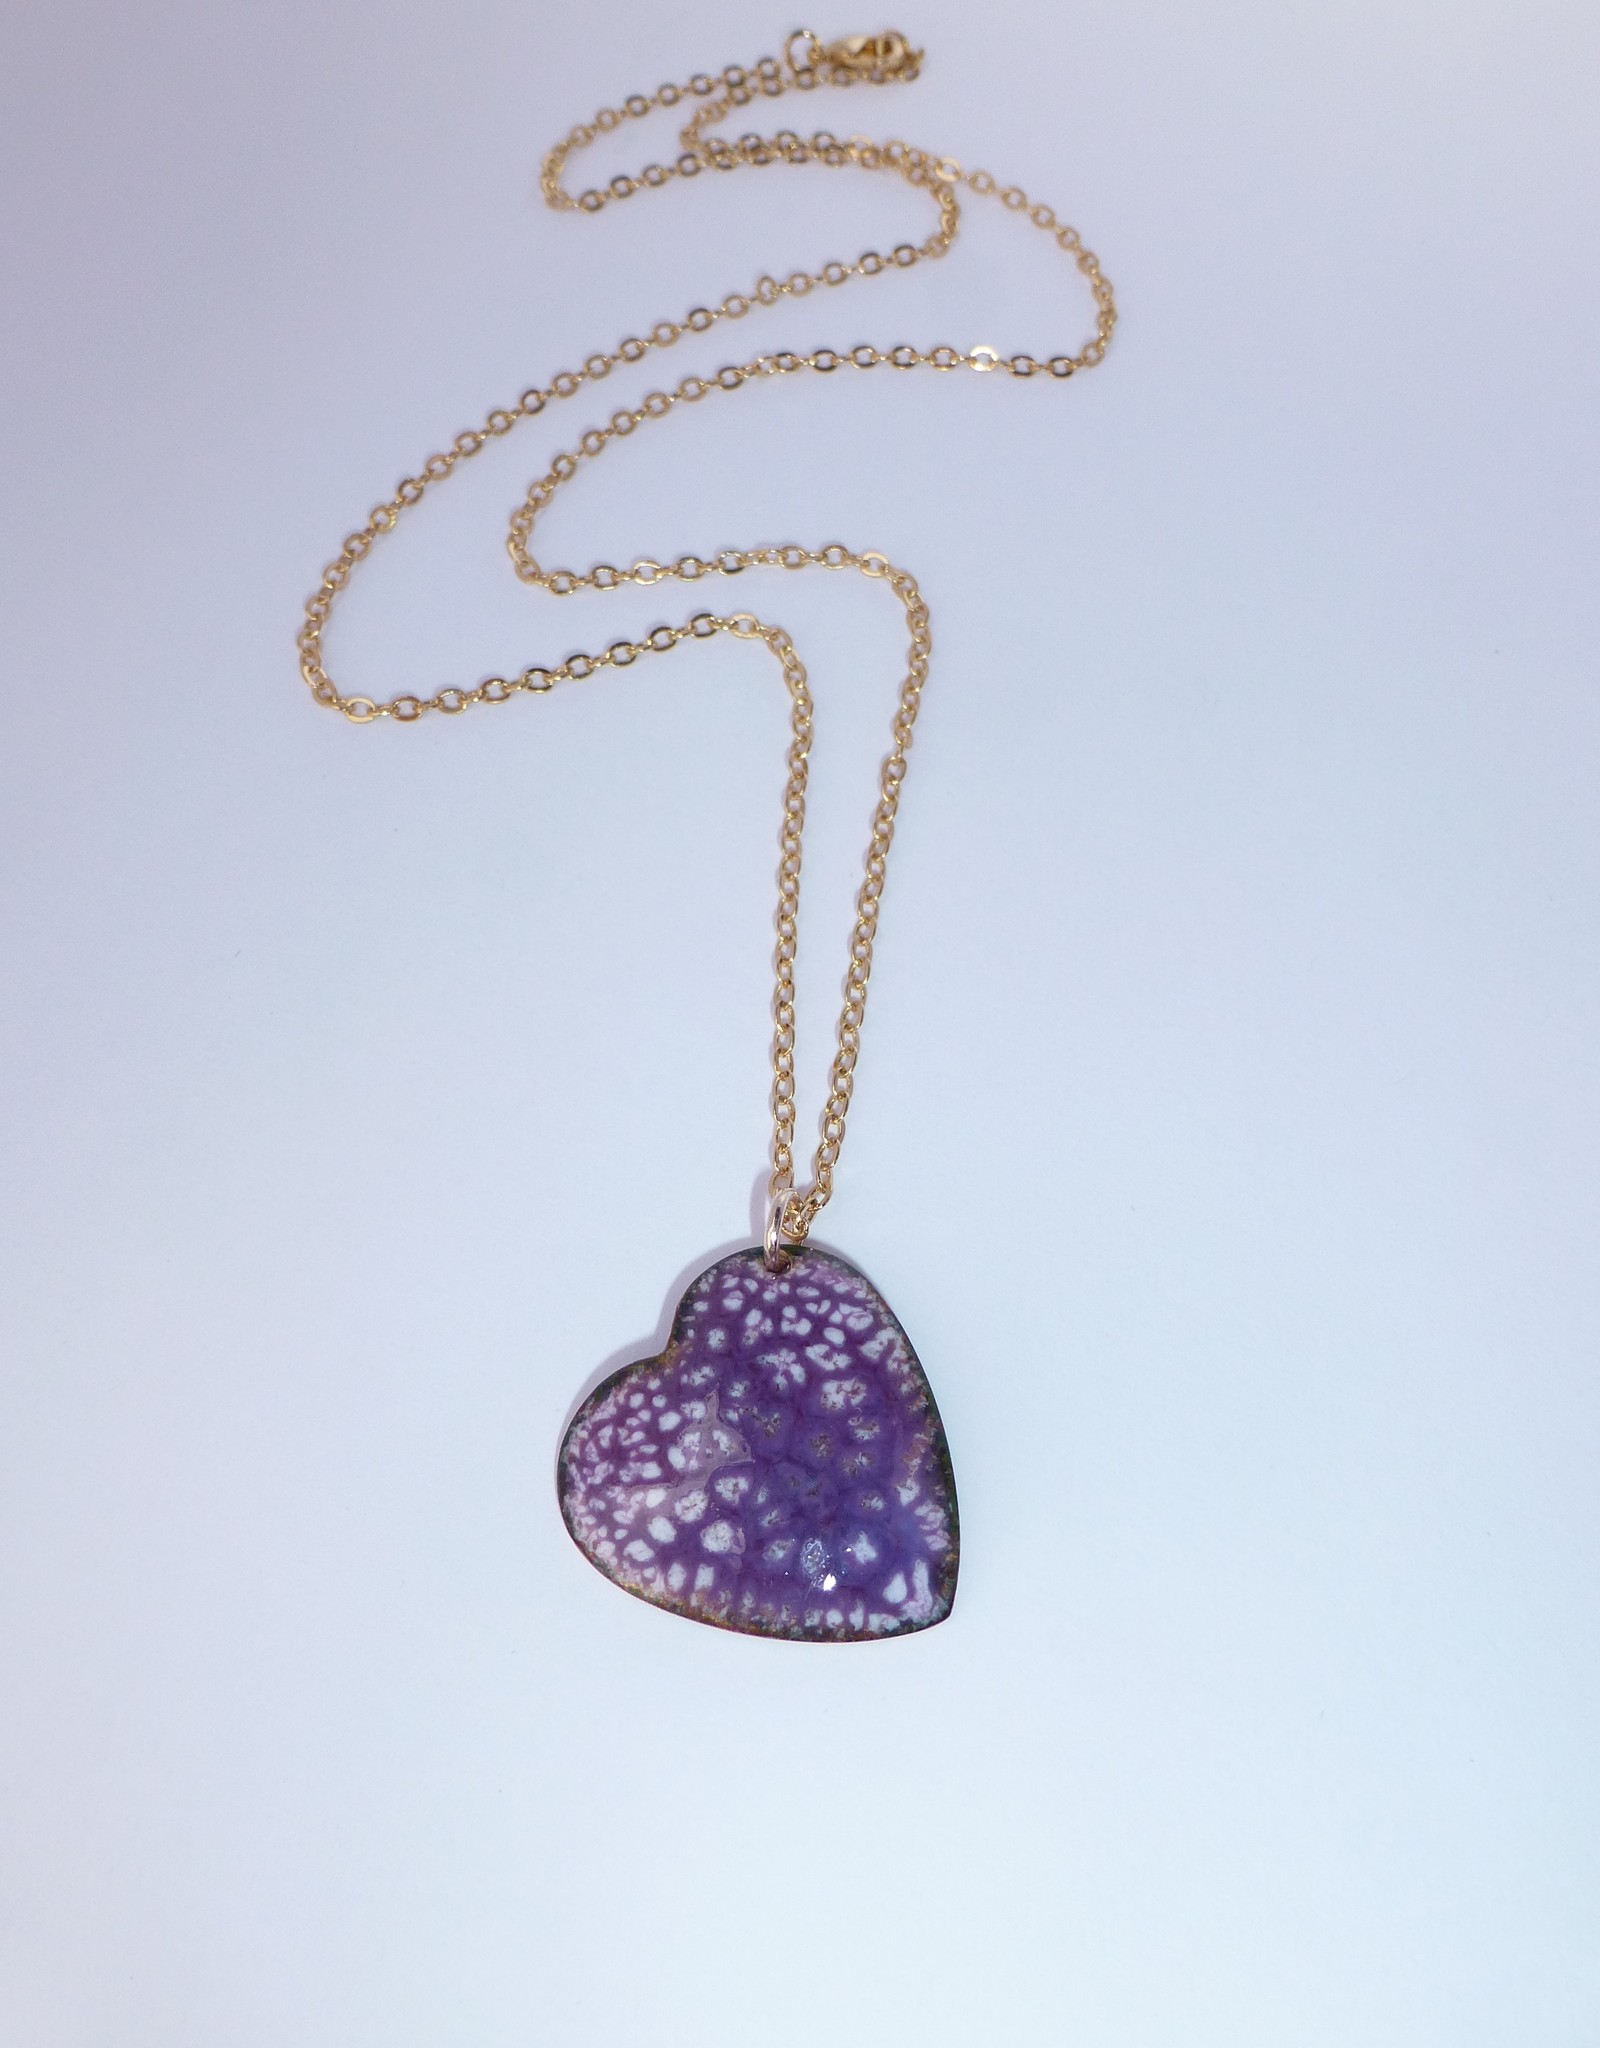 Anne Johnson AJE - Enameled Heart Pendant (large purple)